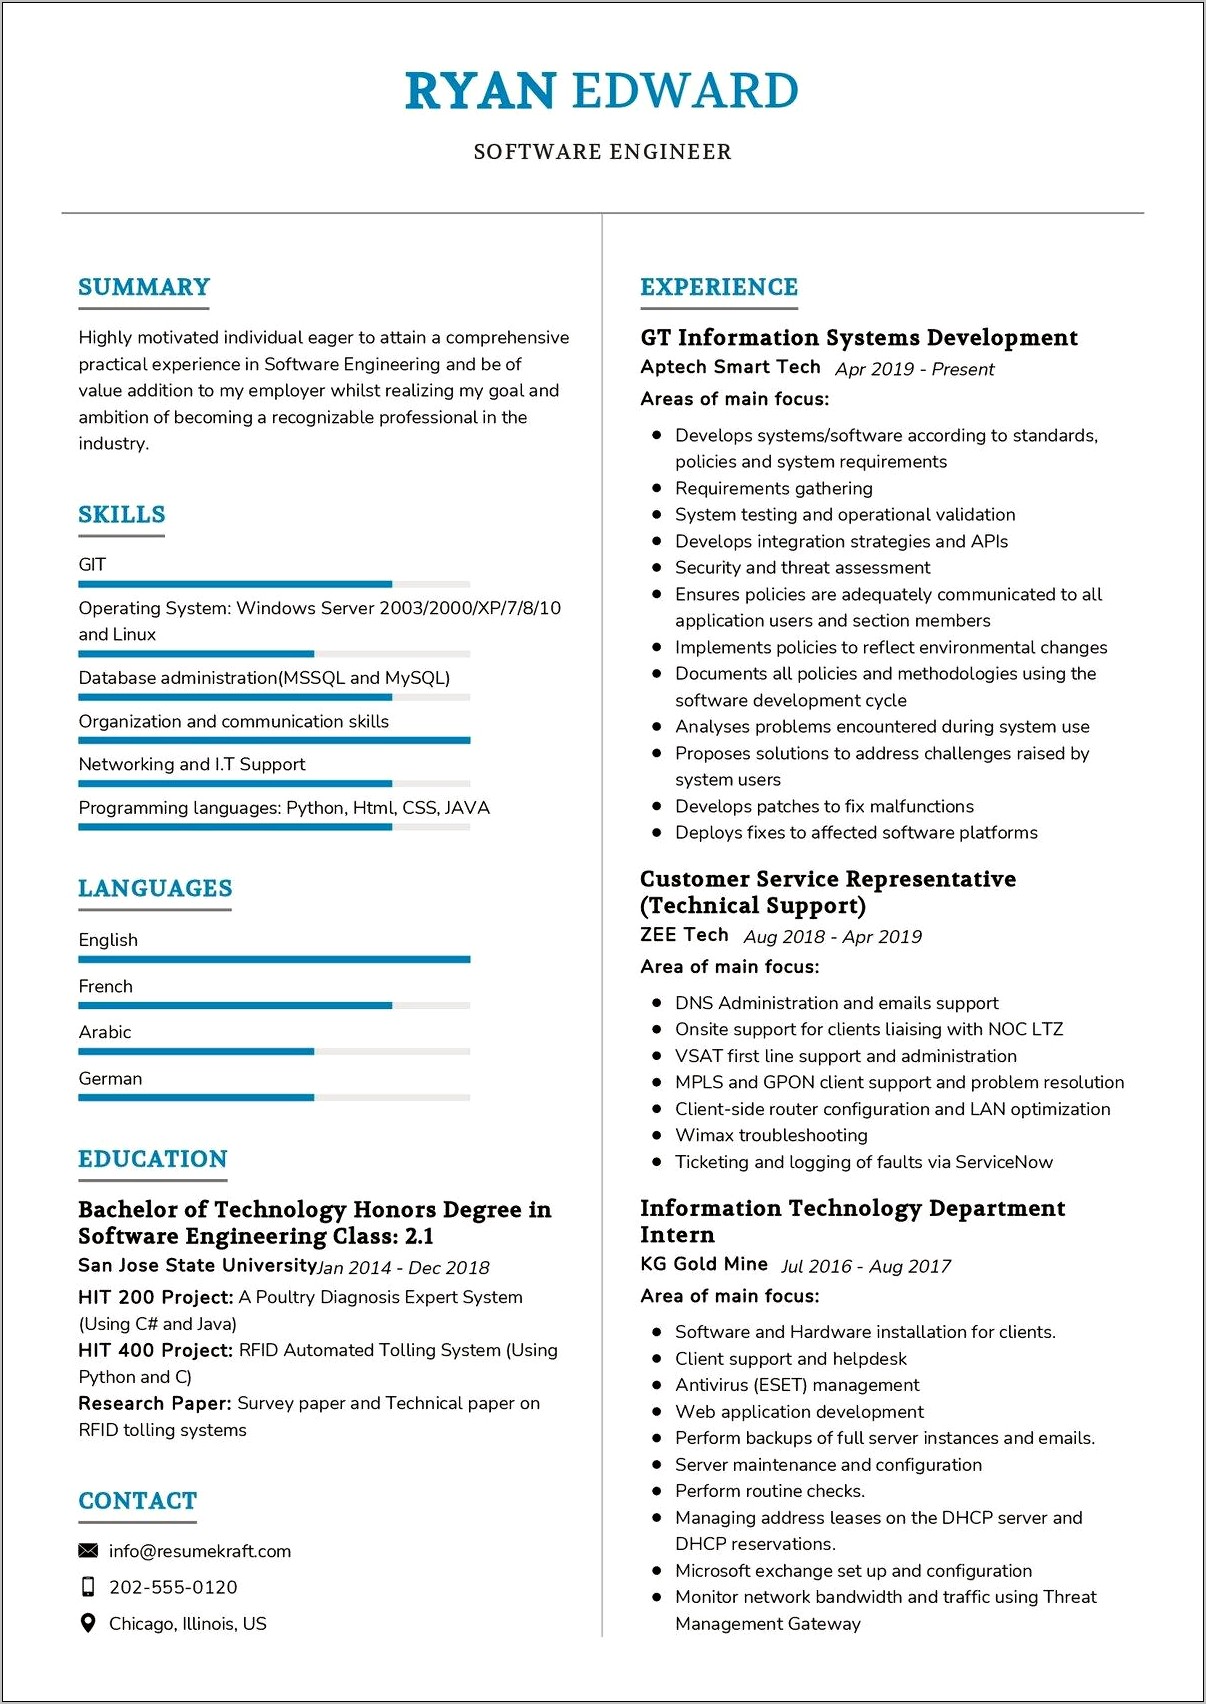 Sample Resume Download Software Engineer